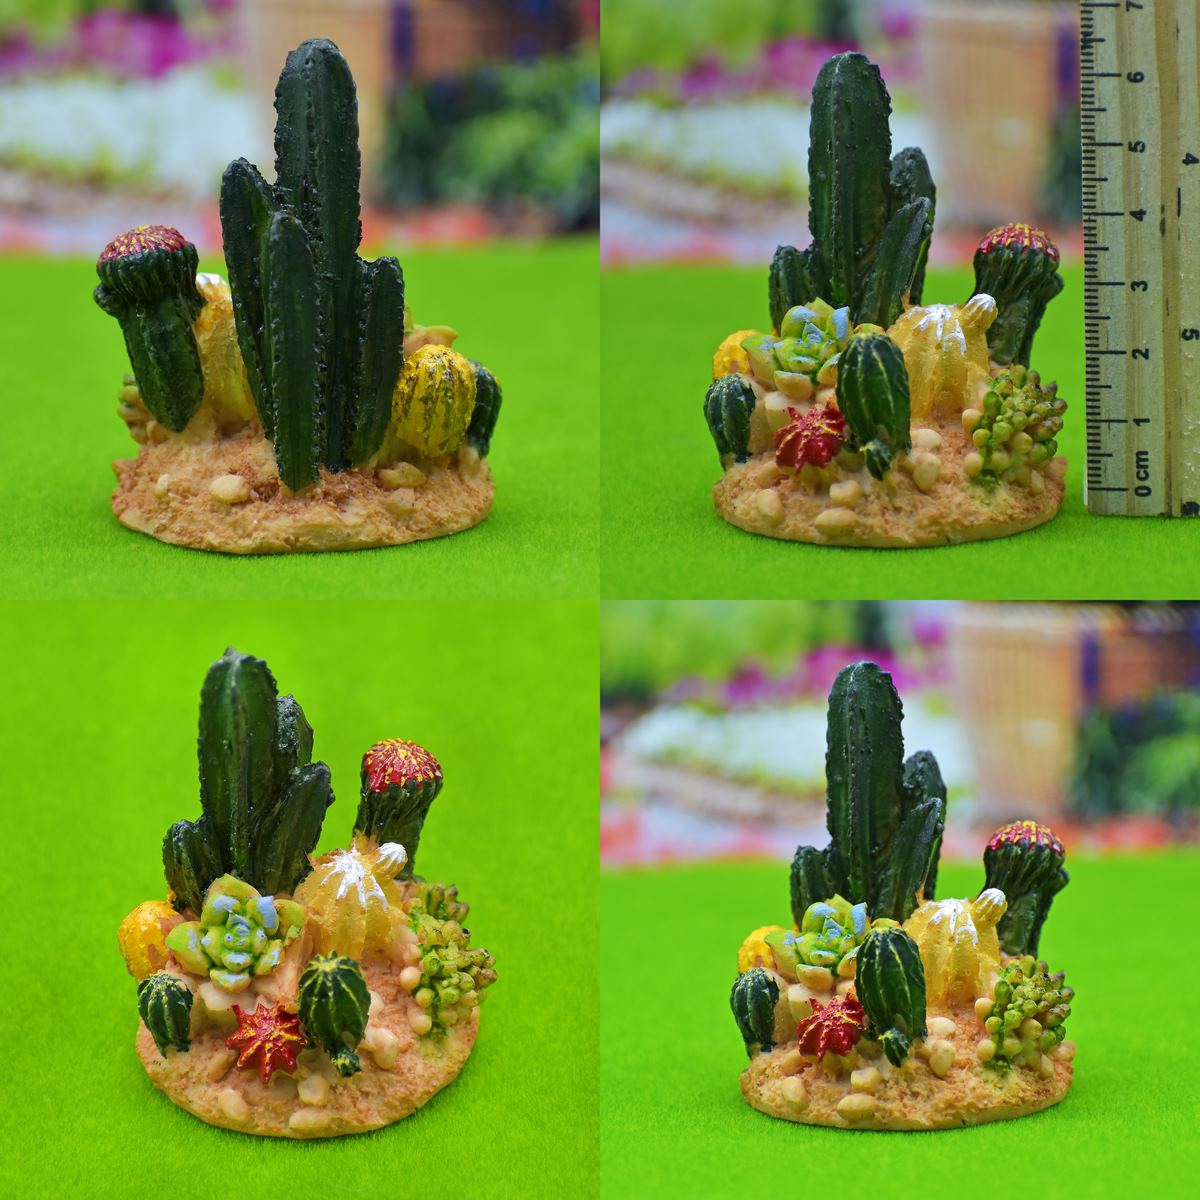 jags-mumbai Miniature Cactus Plant Miniature Model